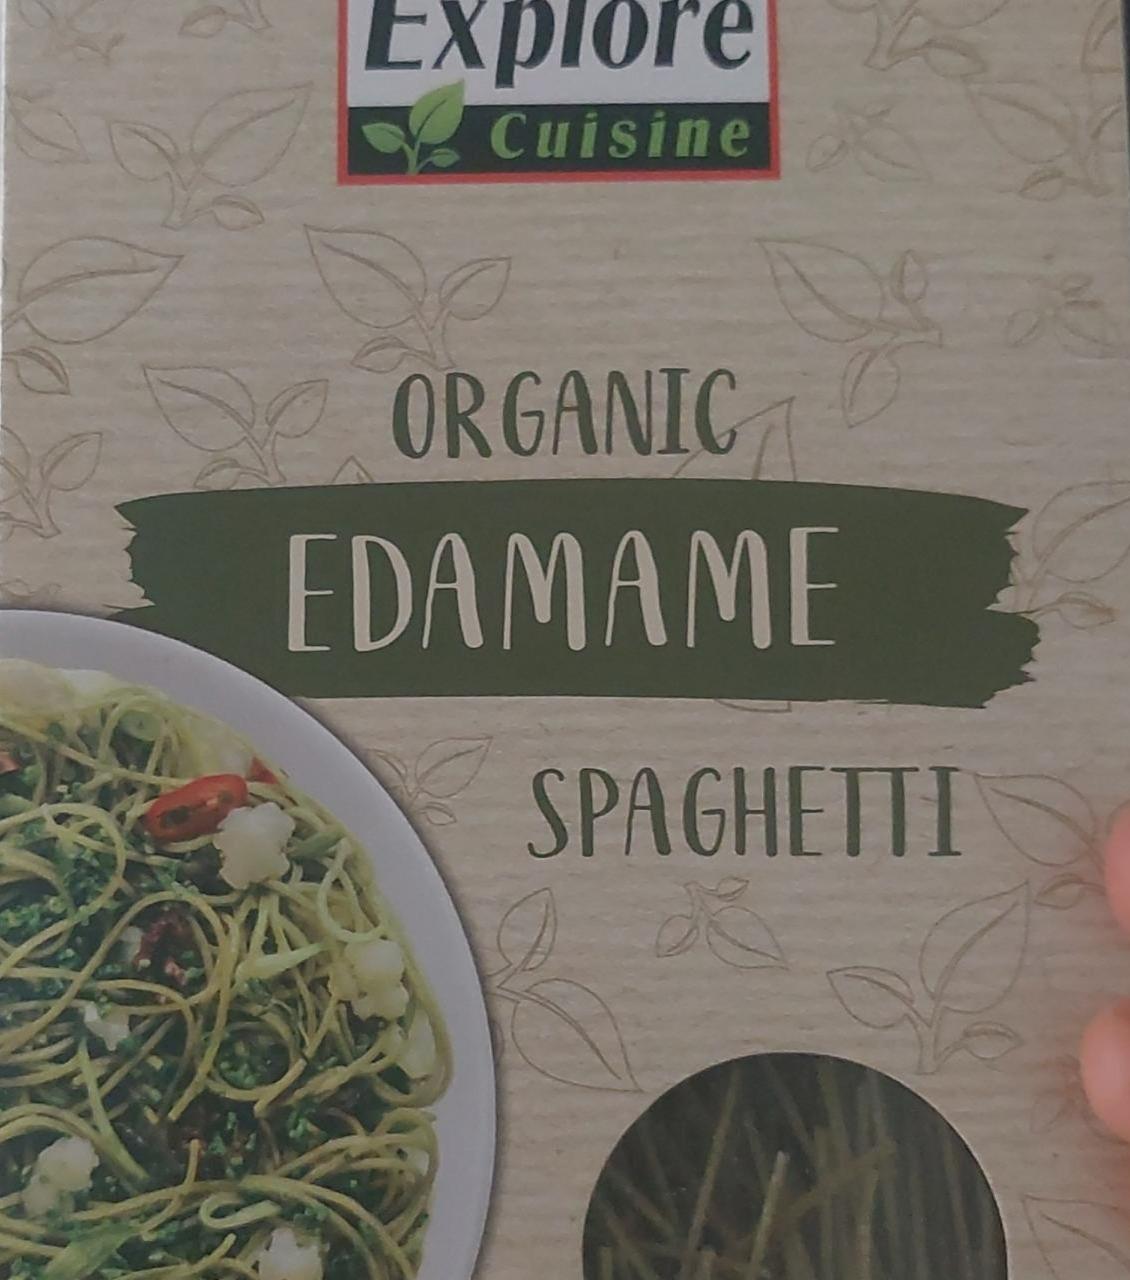 Fotografie - Organic Edamame Spaghetti Explore cuisine